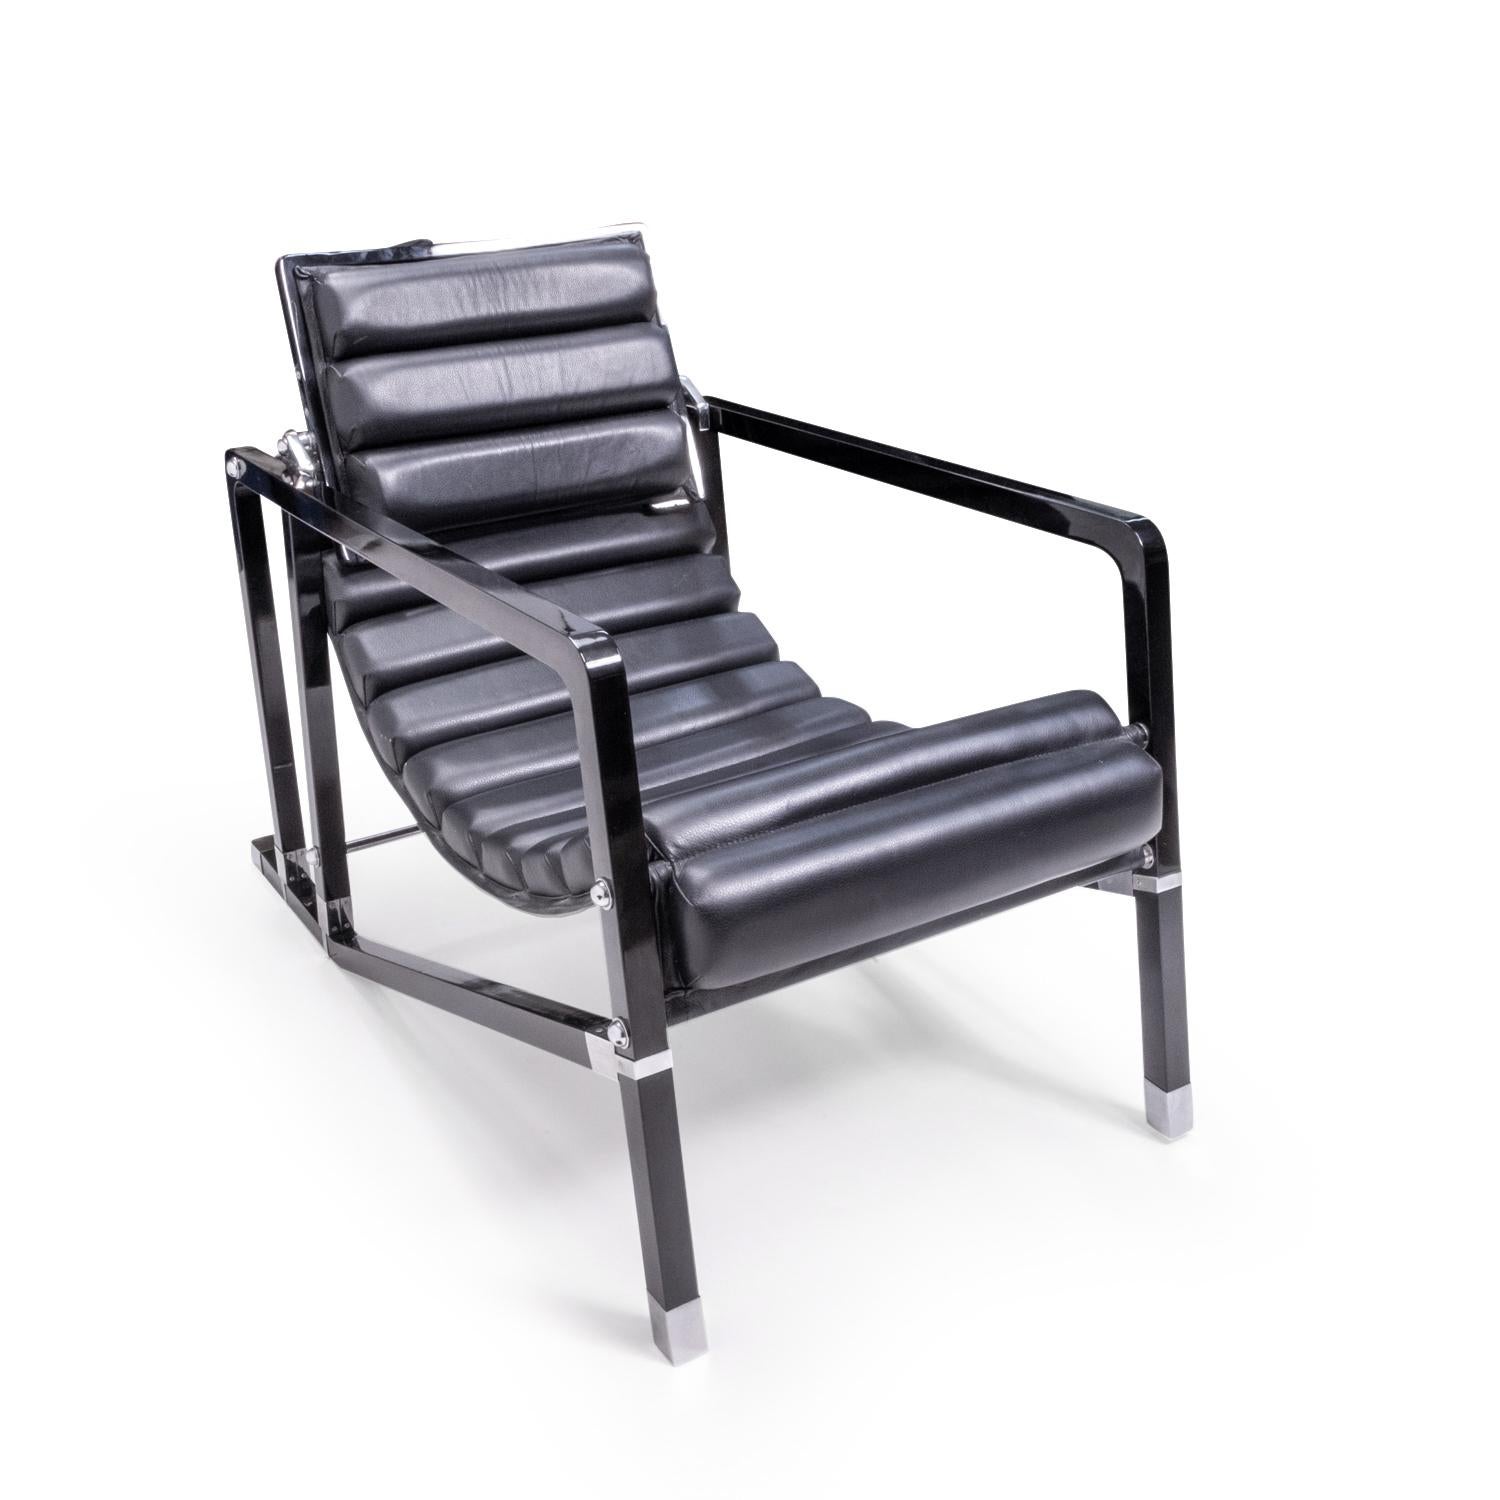 Late 20th Century Modernist Design Classic, Eileen Gray Transat Lounge Chair